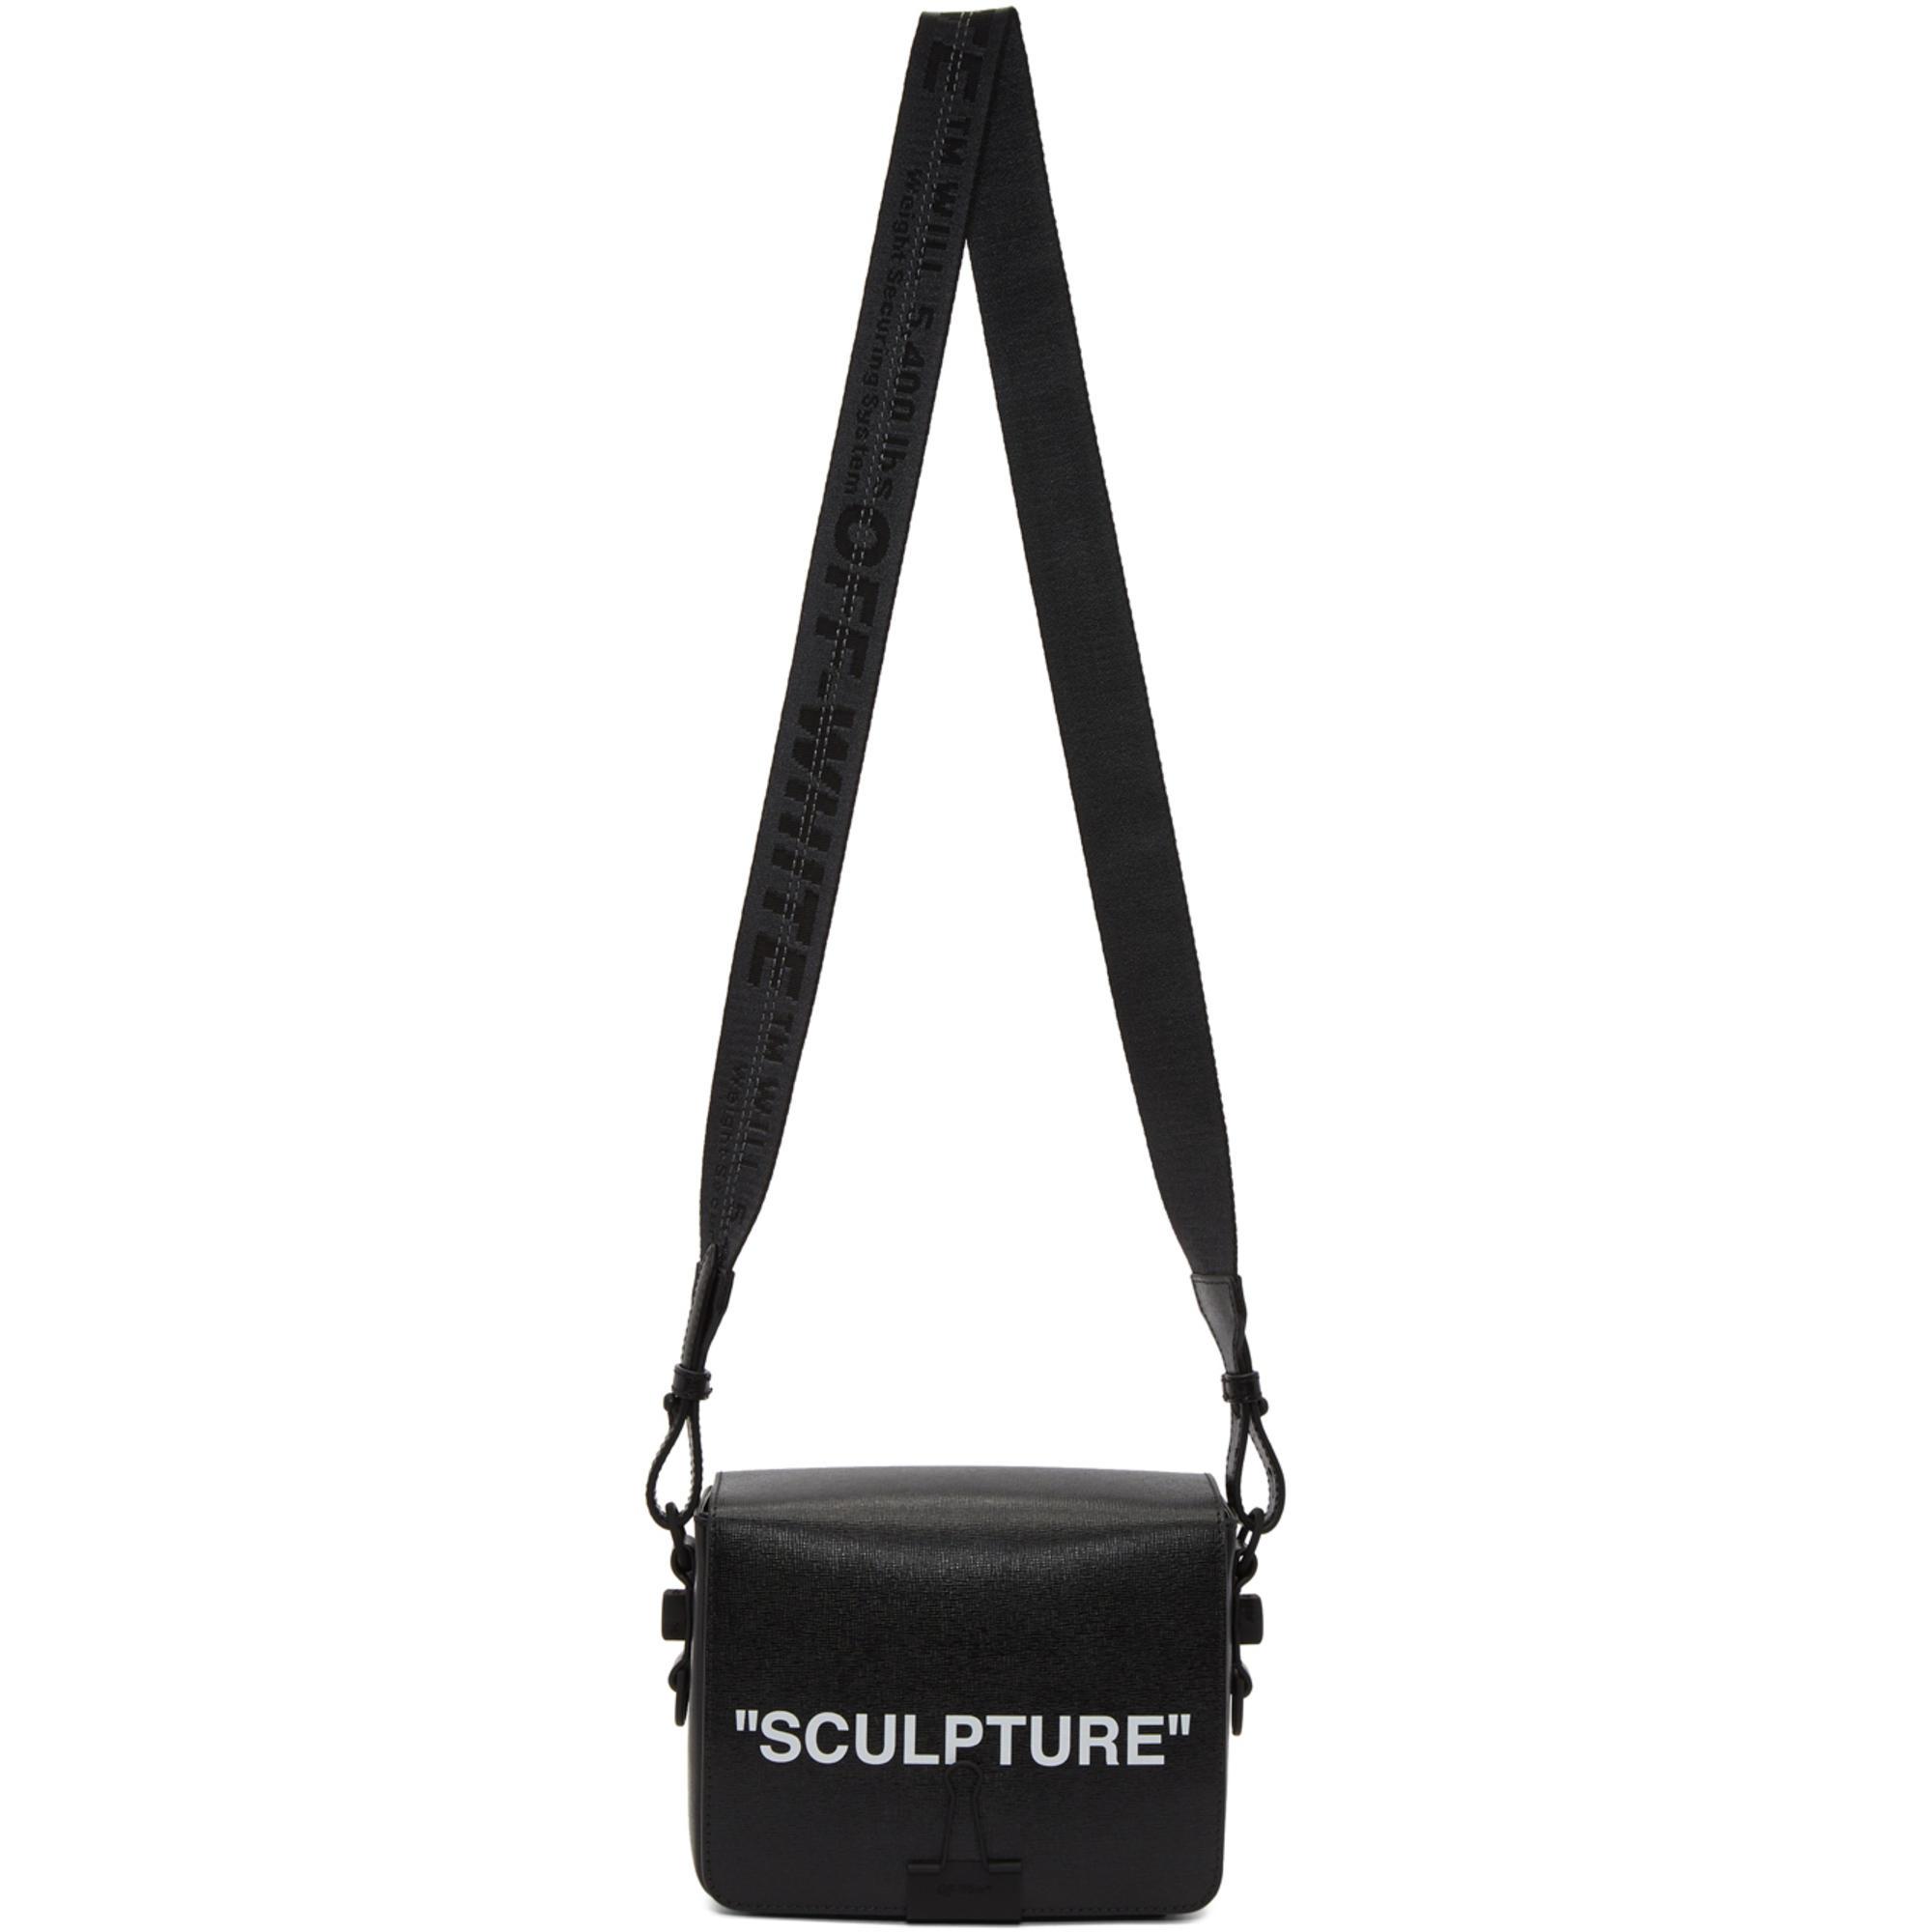 NIB OFF-WHITE C/O VIRGIL ABLOH Black Sculpture Flap Bag Size OS